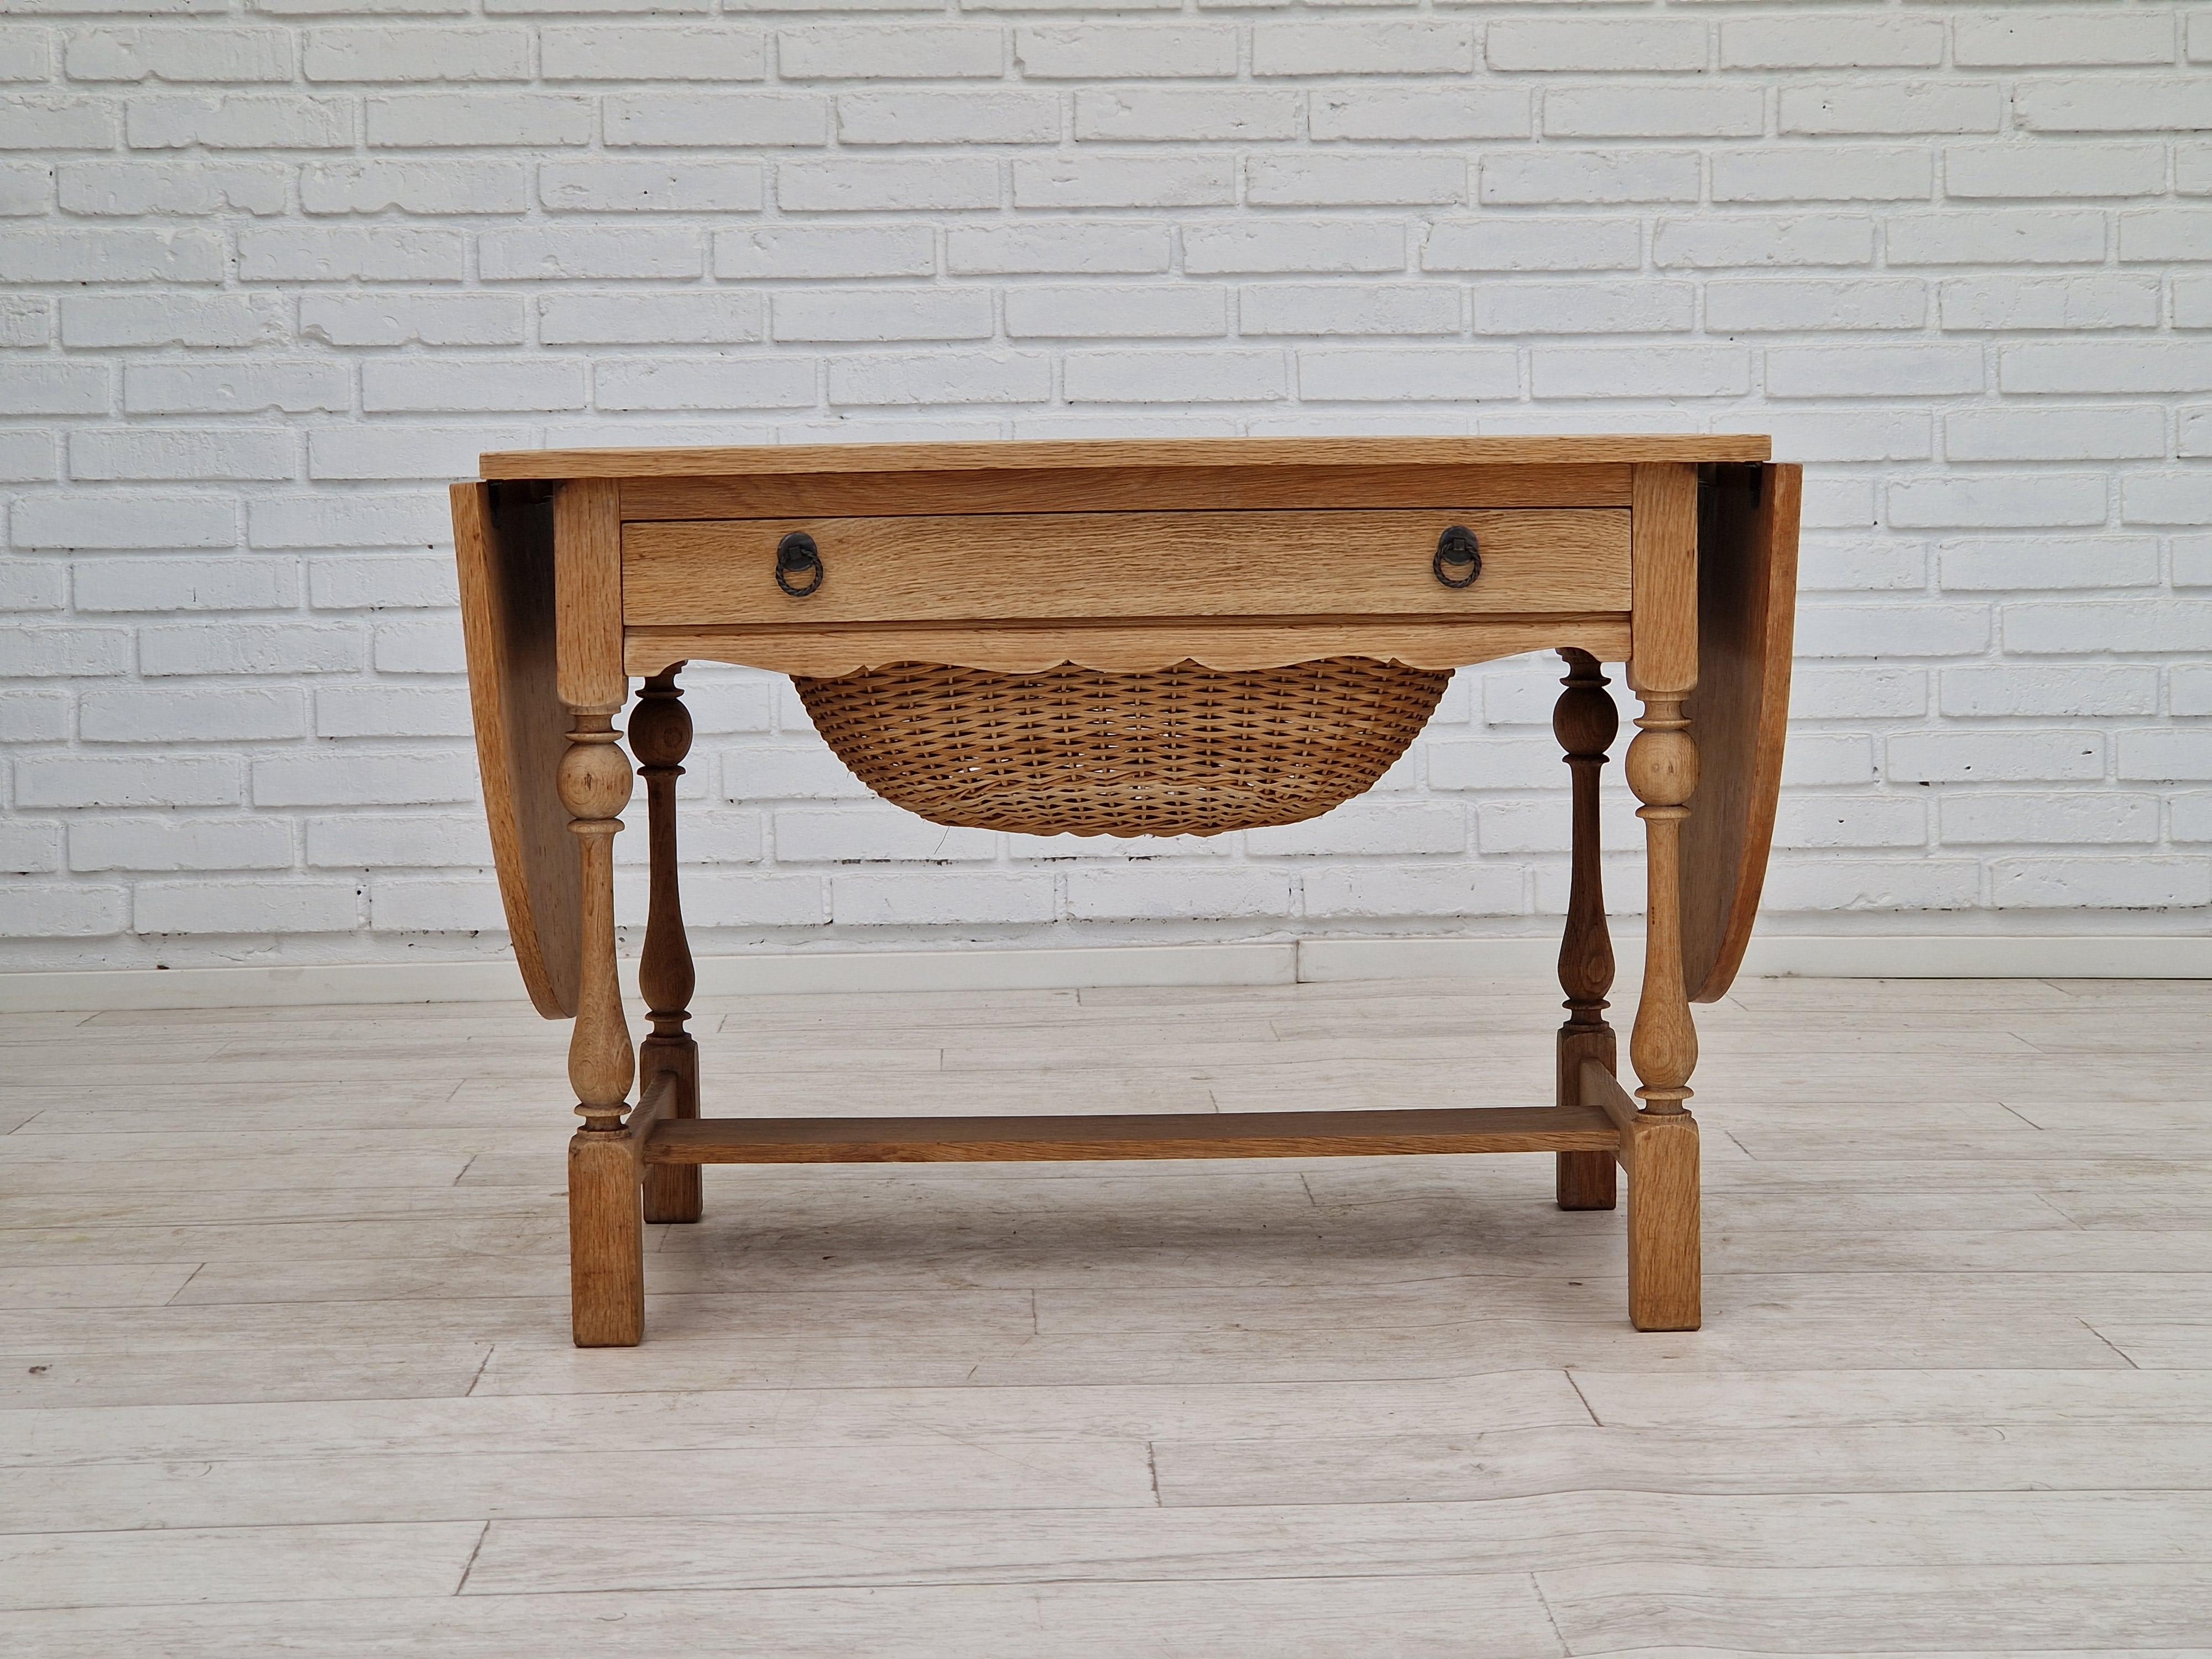 Scandinavian Modern 1970s, Danish Design, Coffee / Sewing Table, Oak Wood, Original Condition